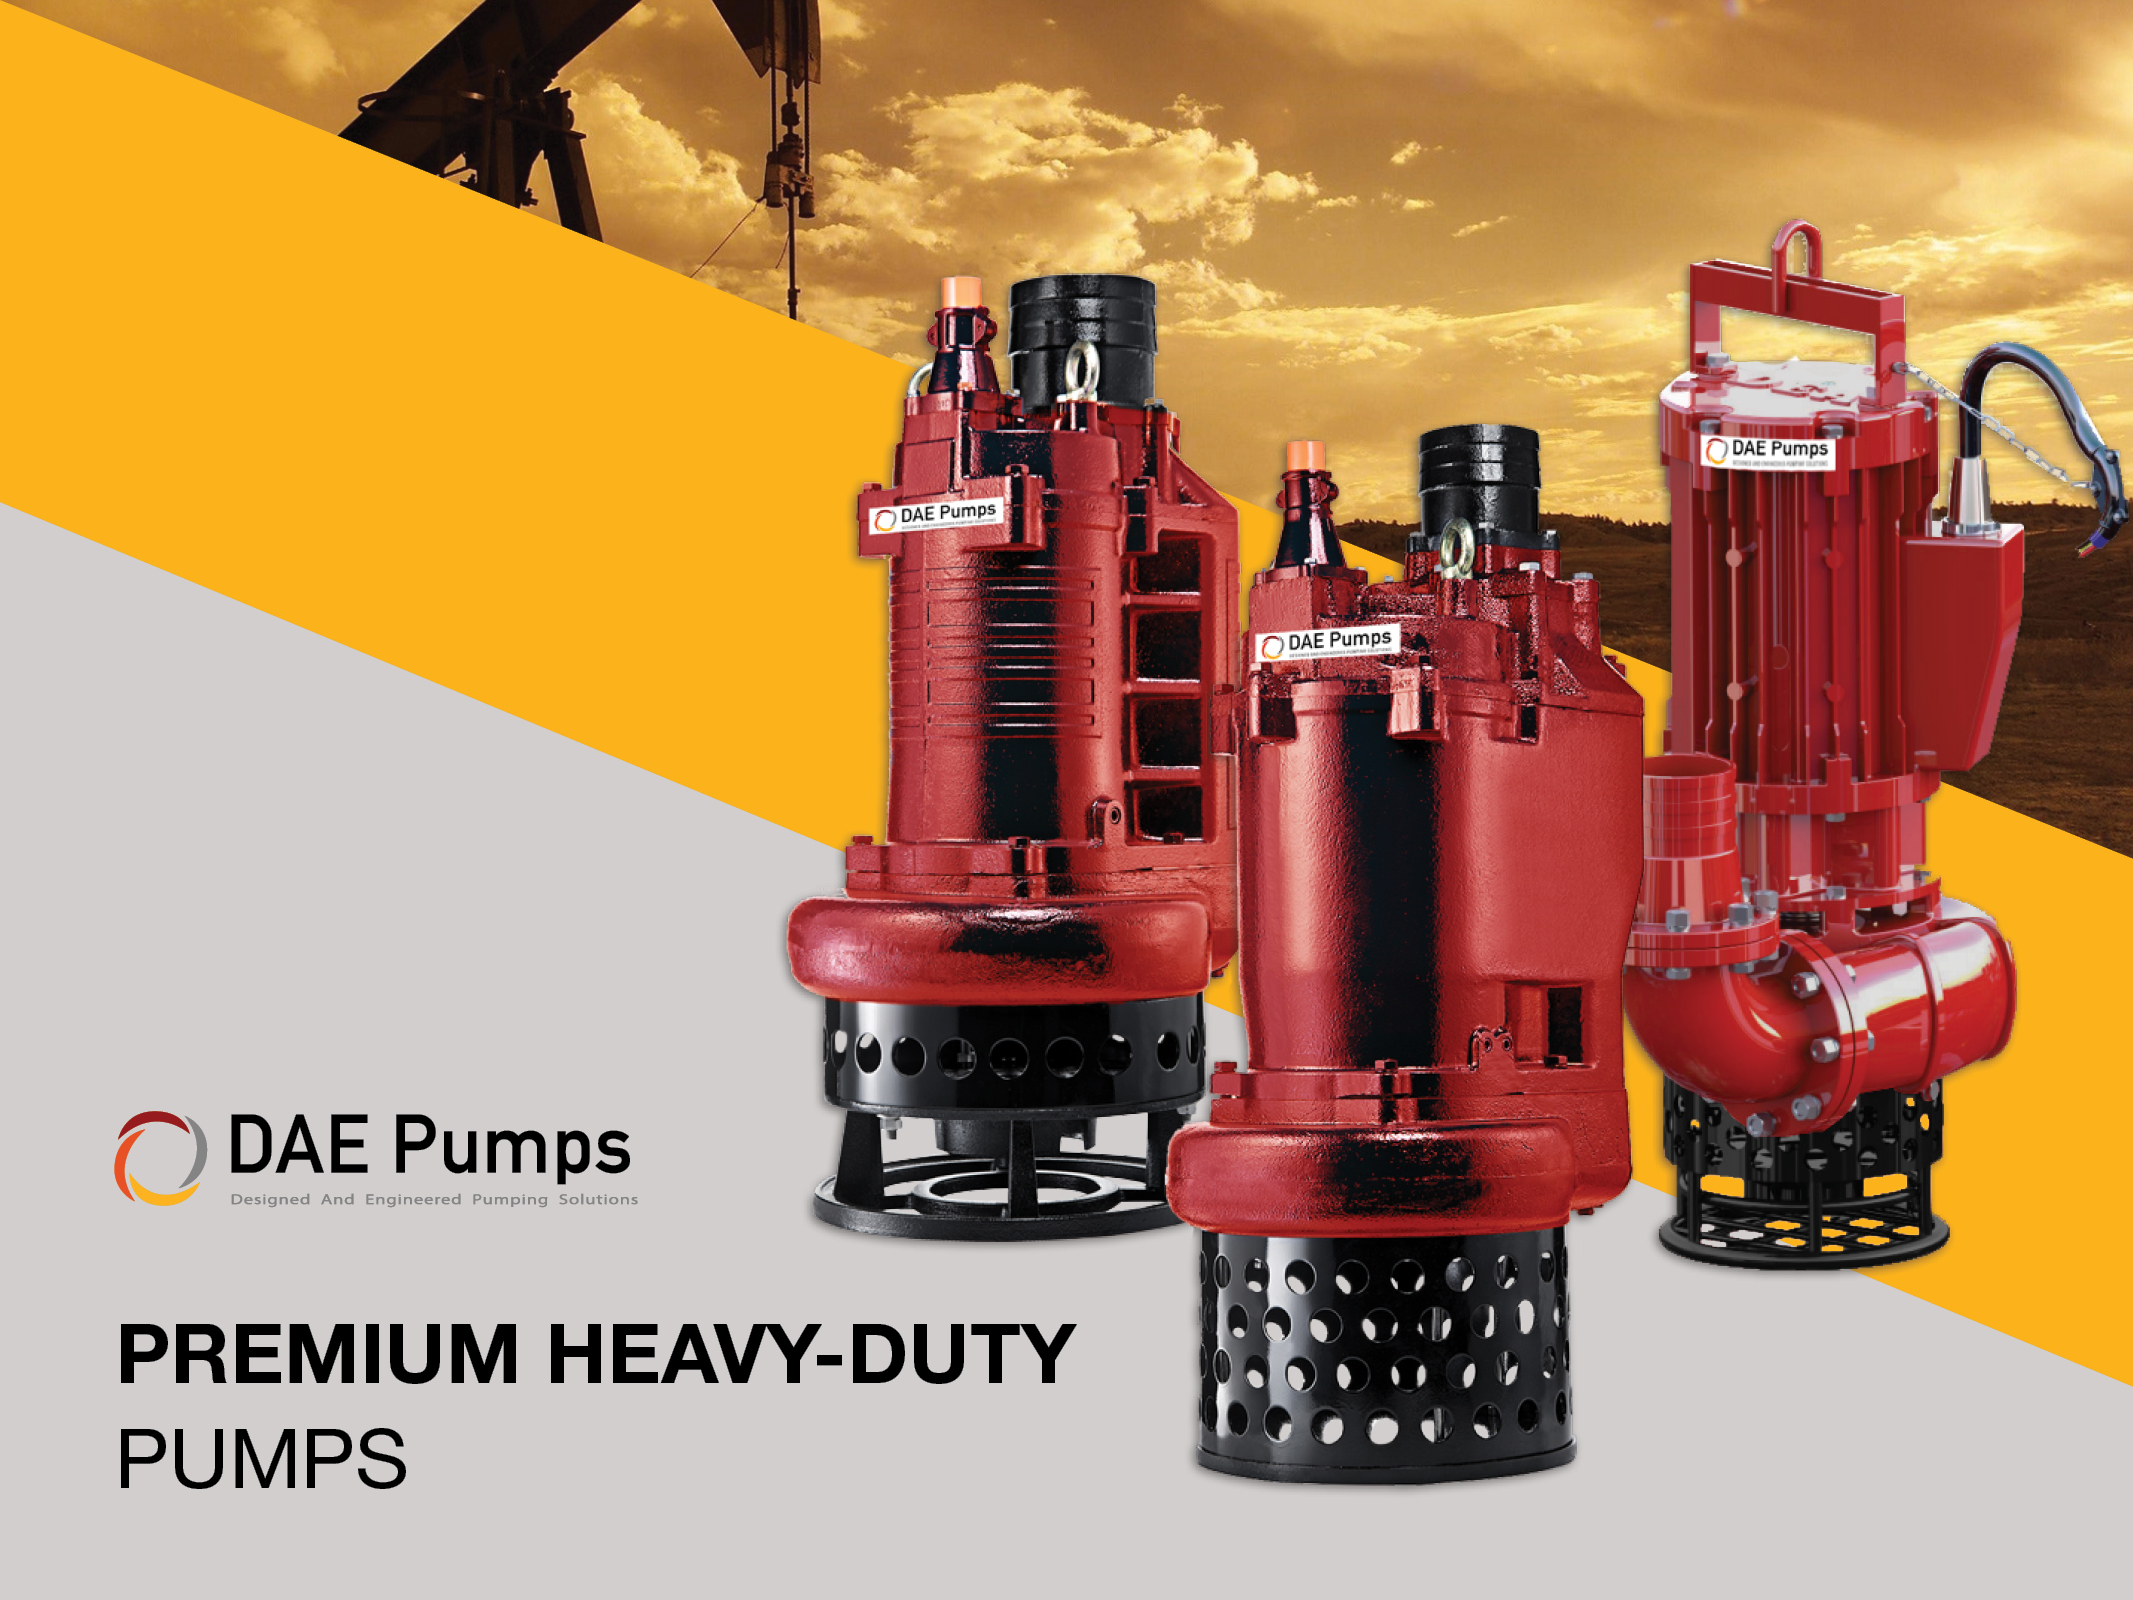 DAE Pumps Slurry Pumps and Dredge Equipment Supplier